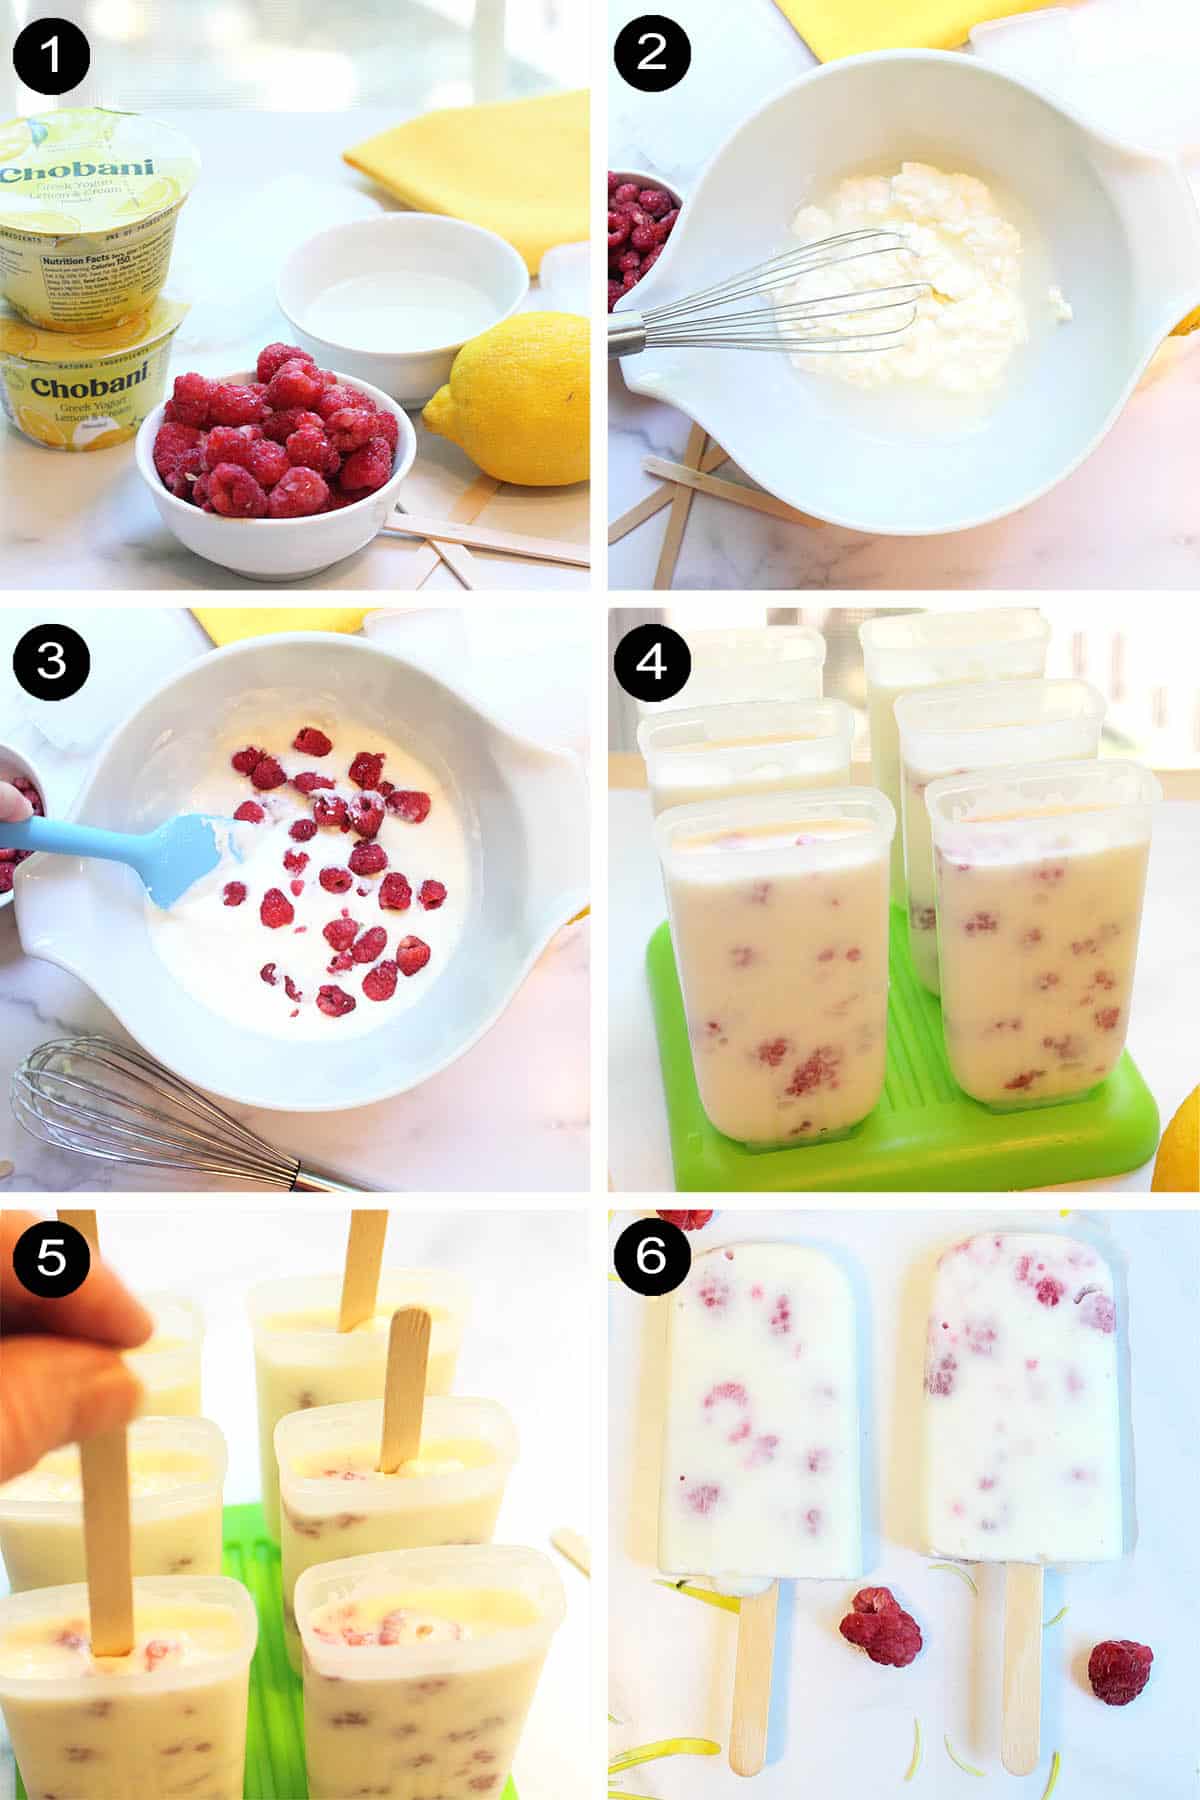 How to make lemon popsicles with raspberries.